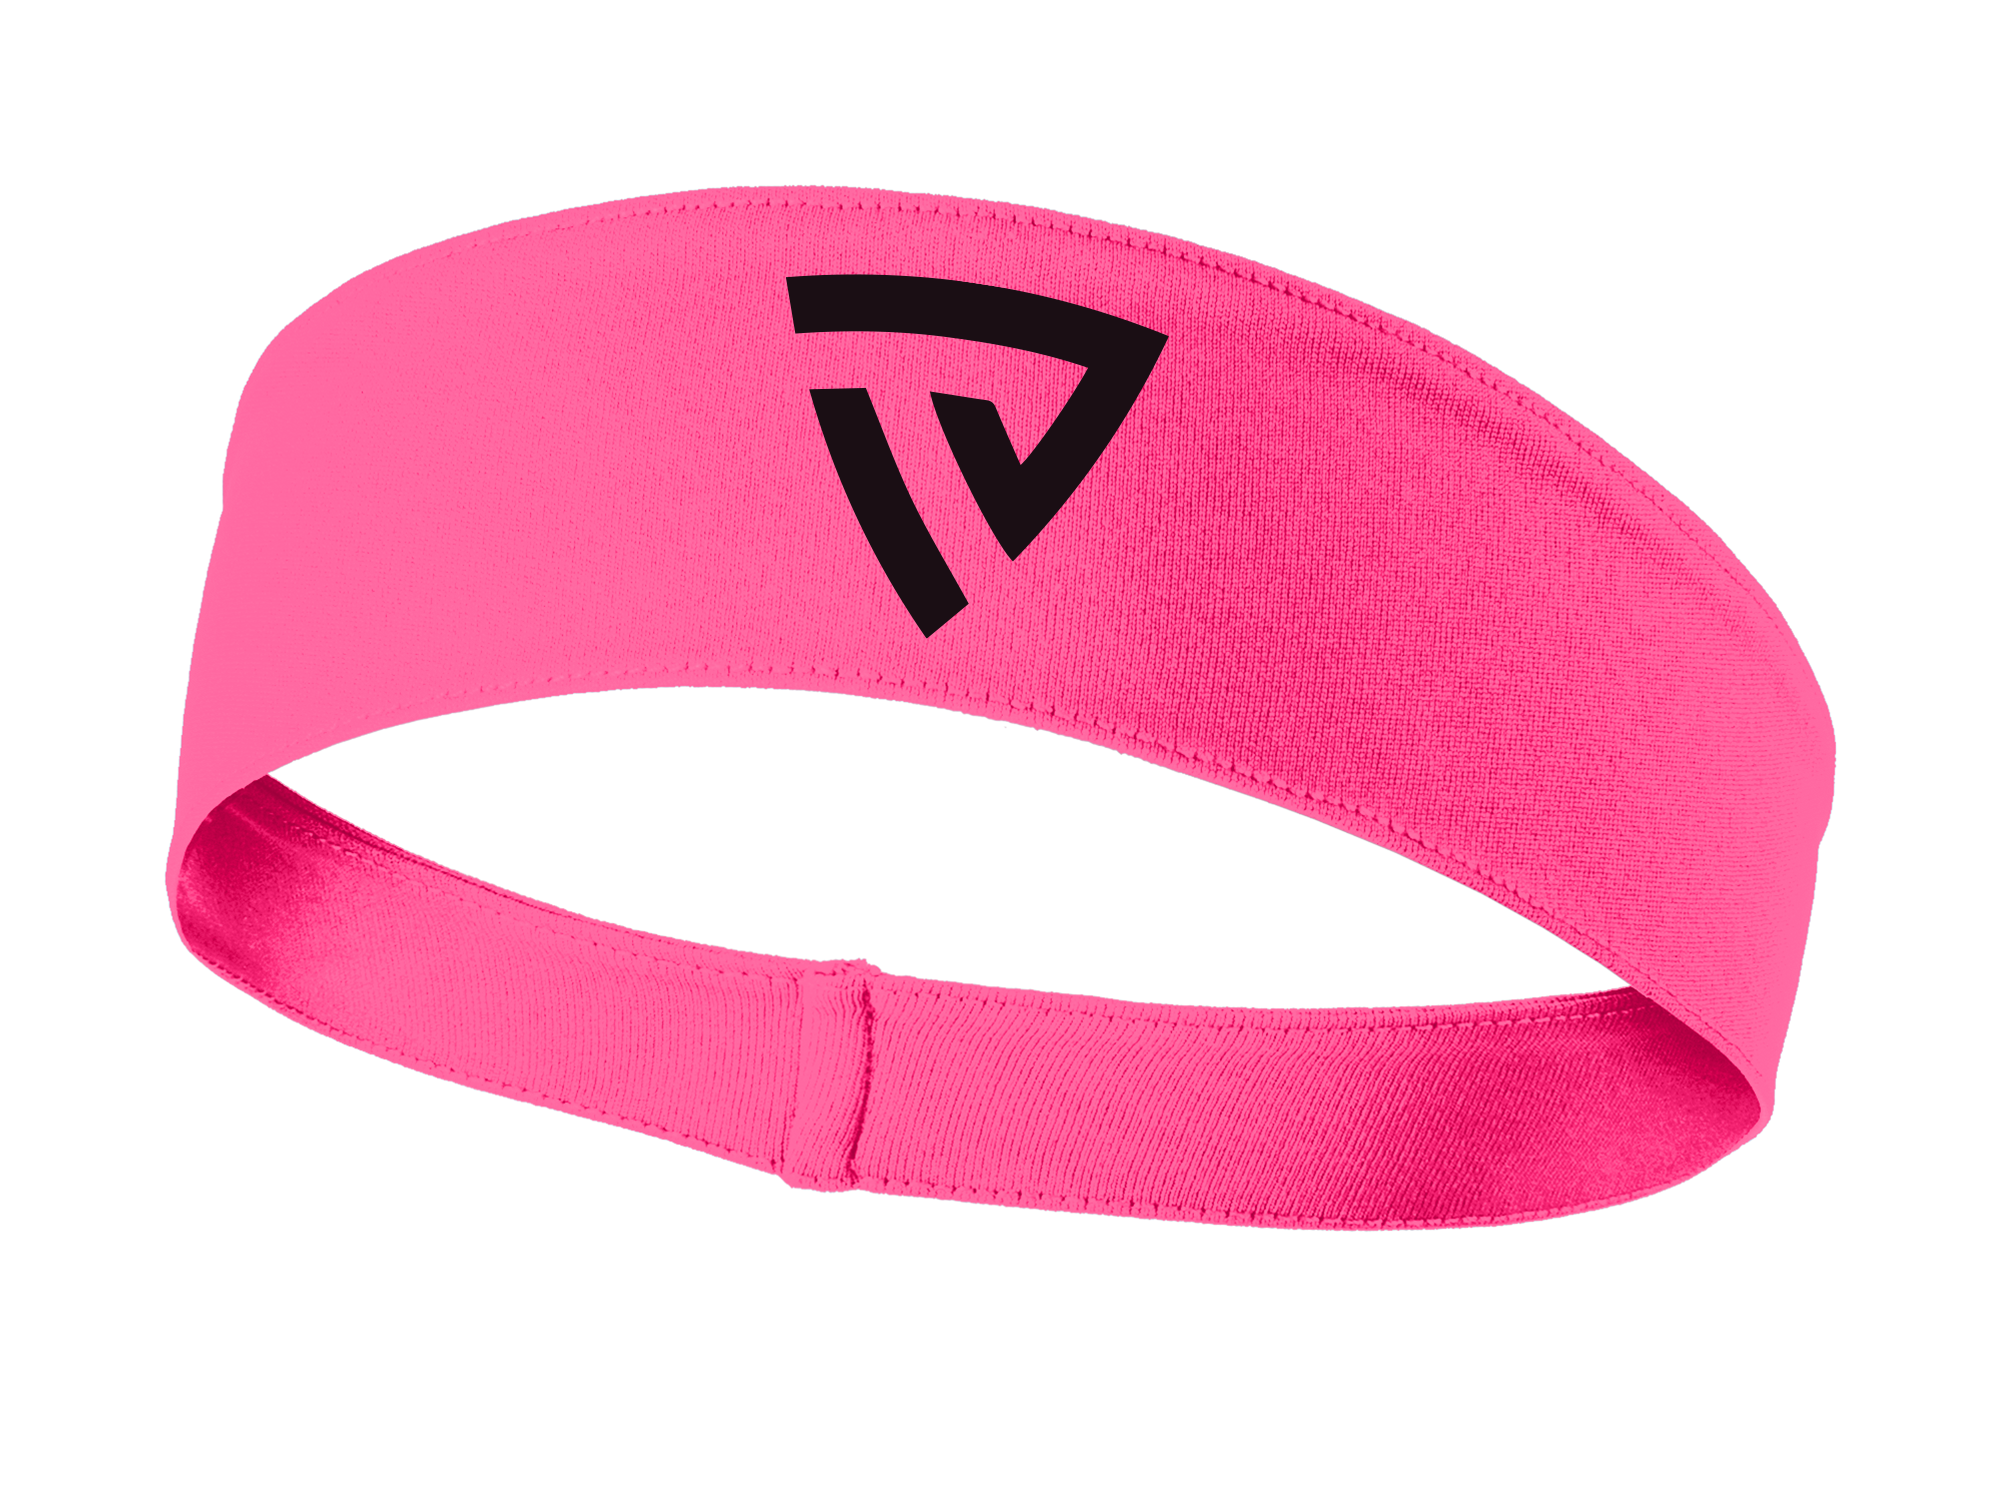 Rivalry Neon Pink Headband